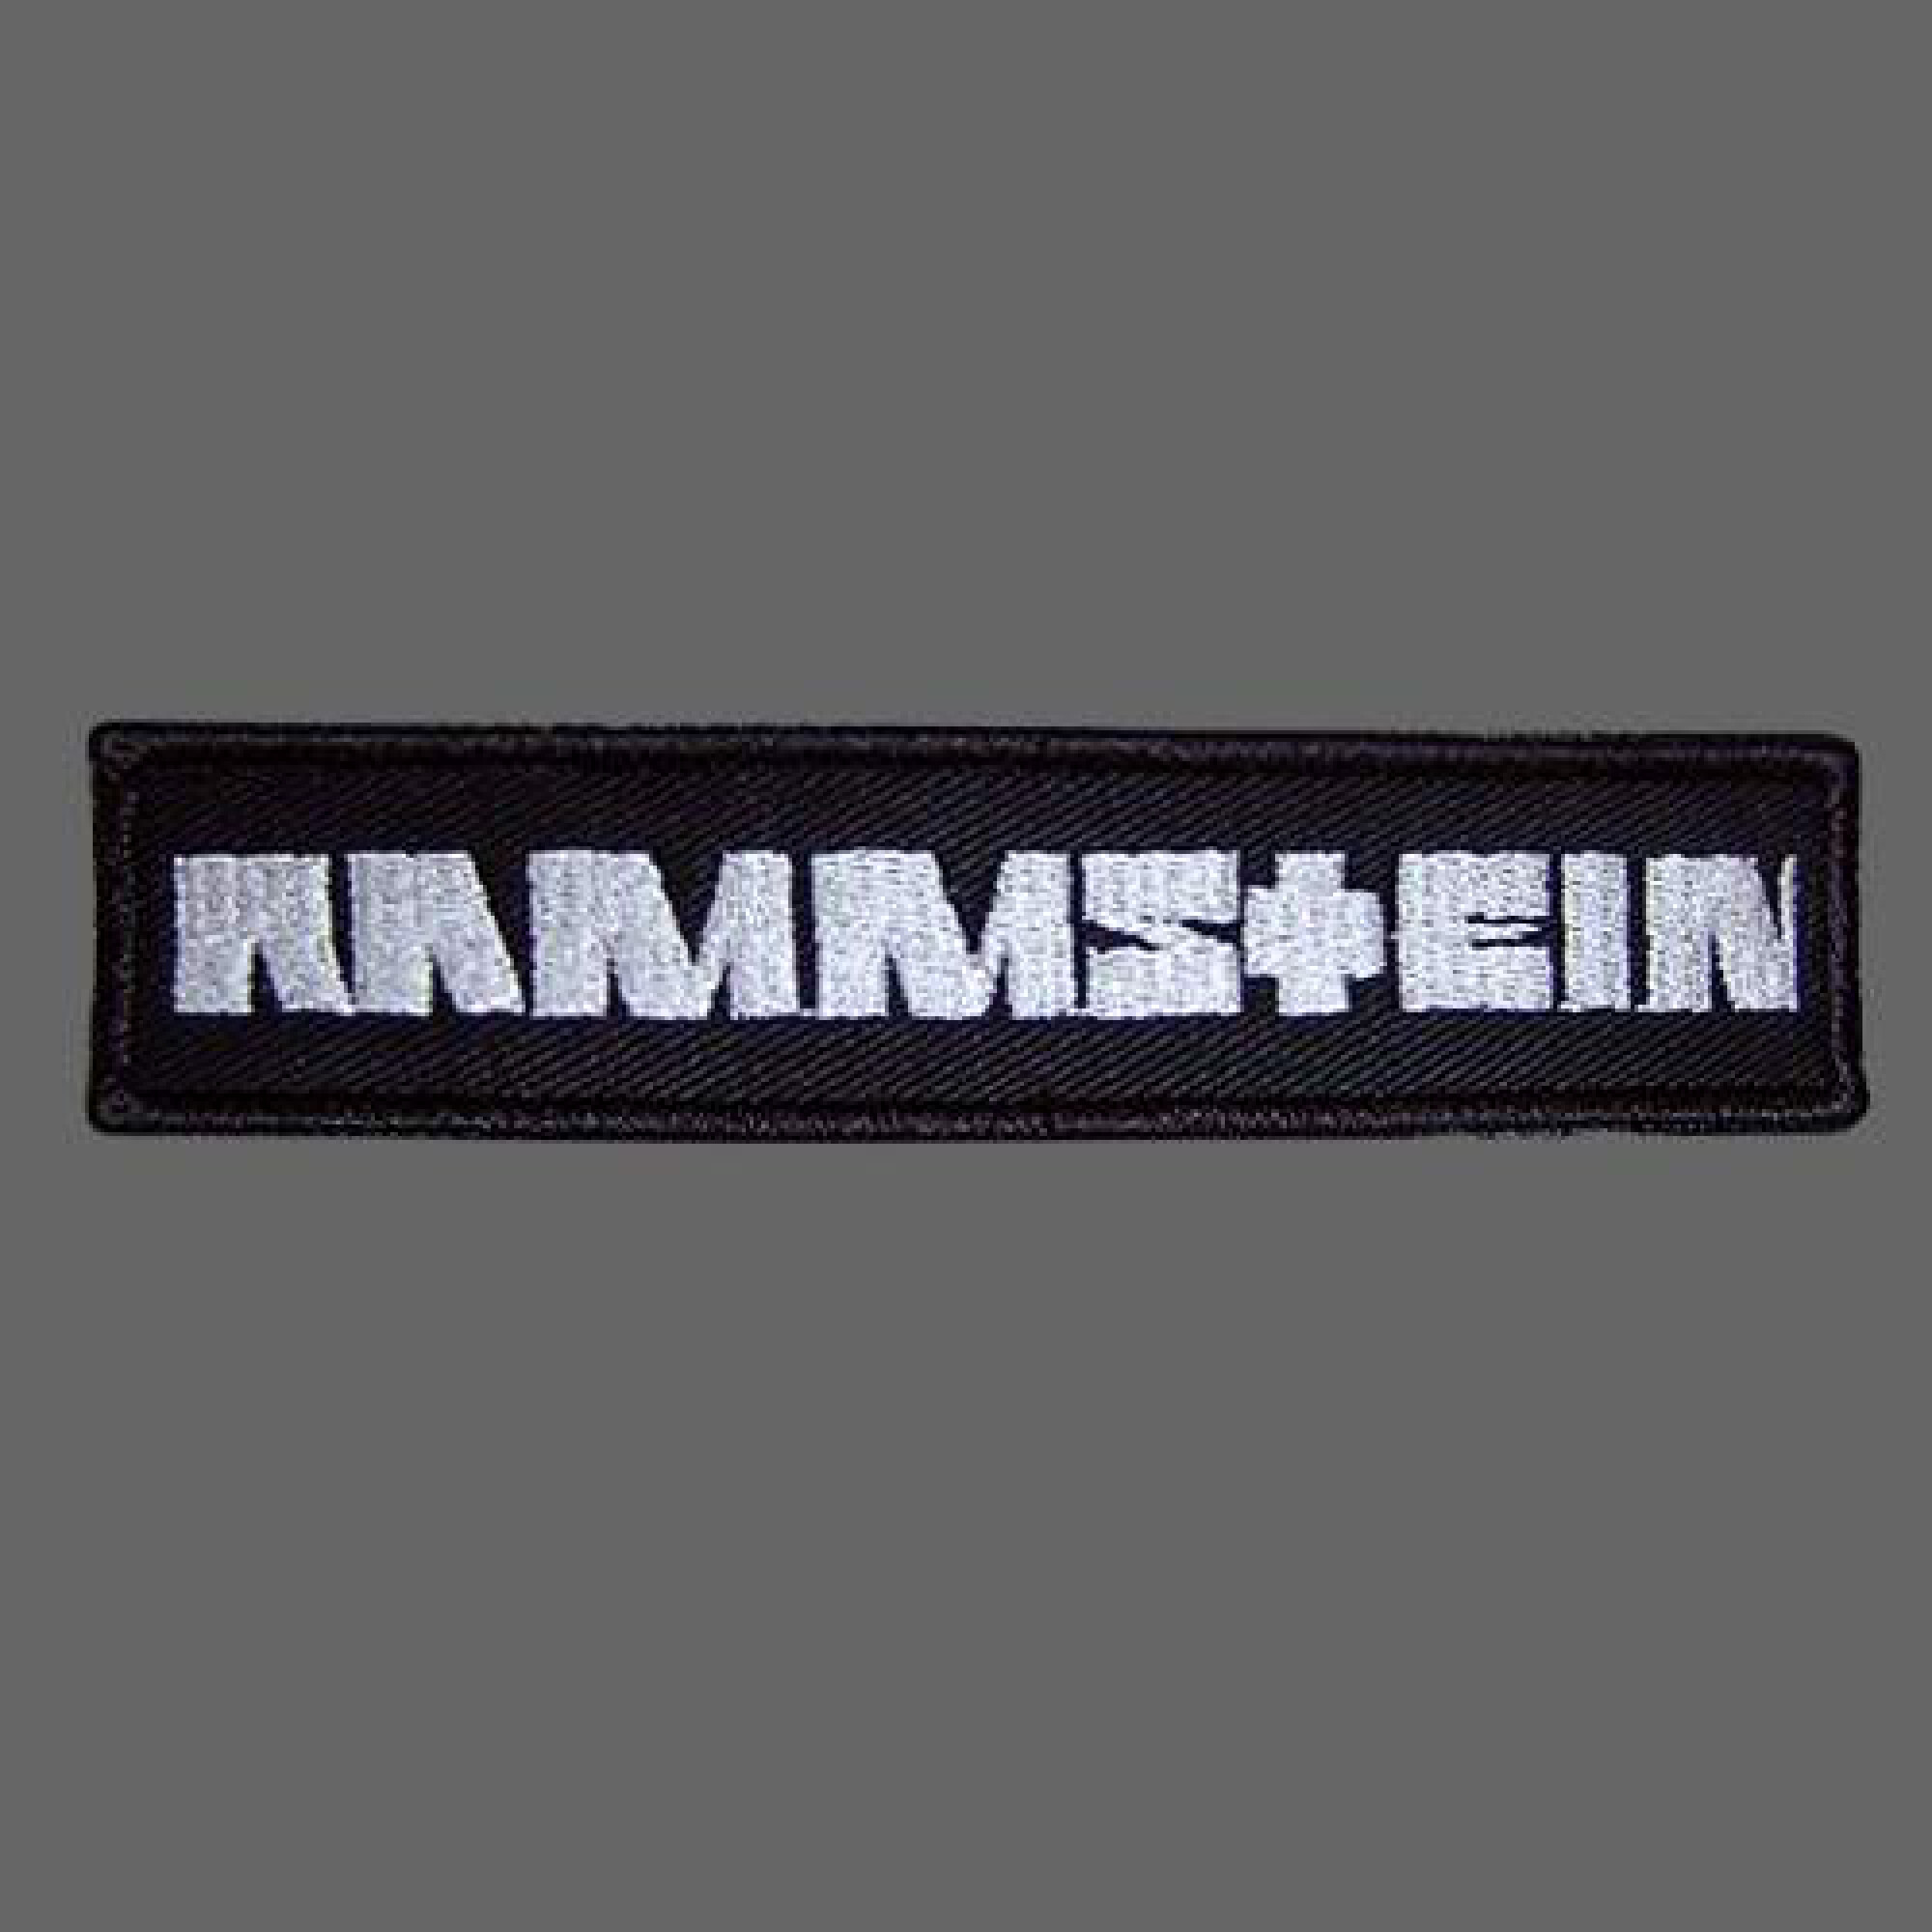 Patch “Rammstein”